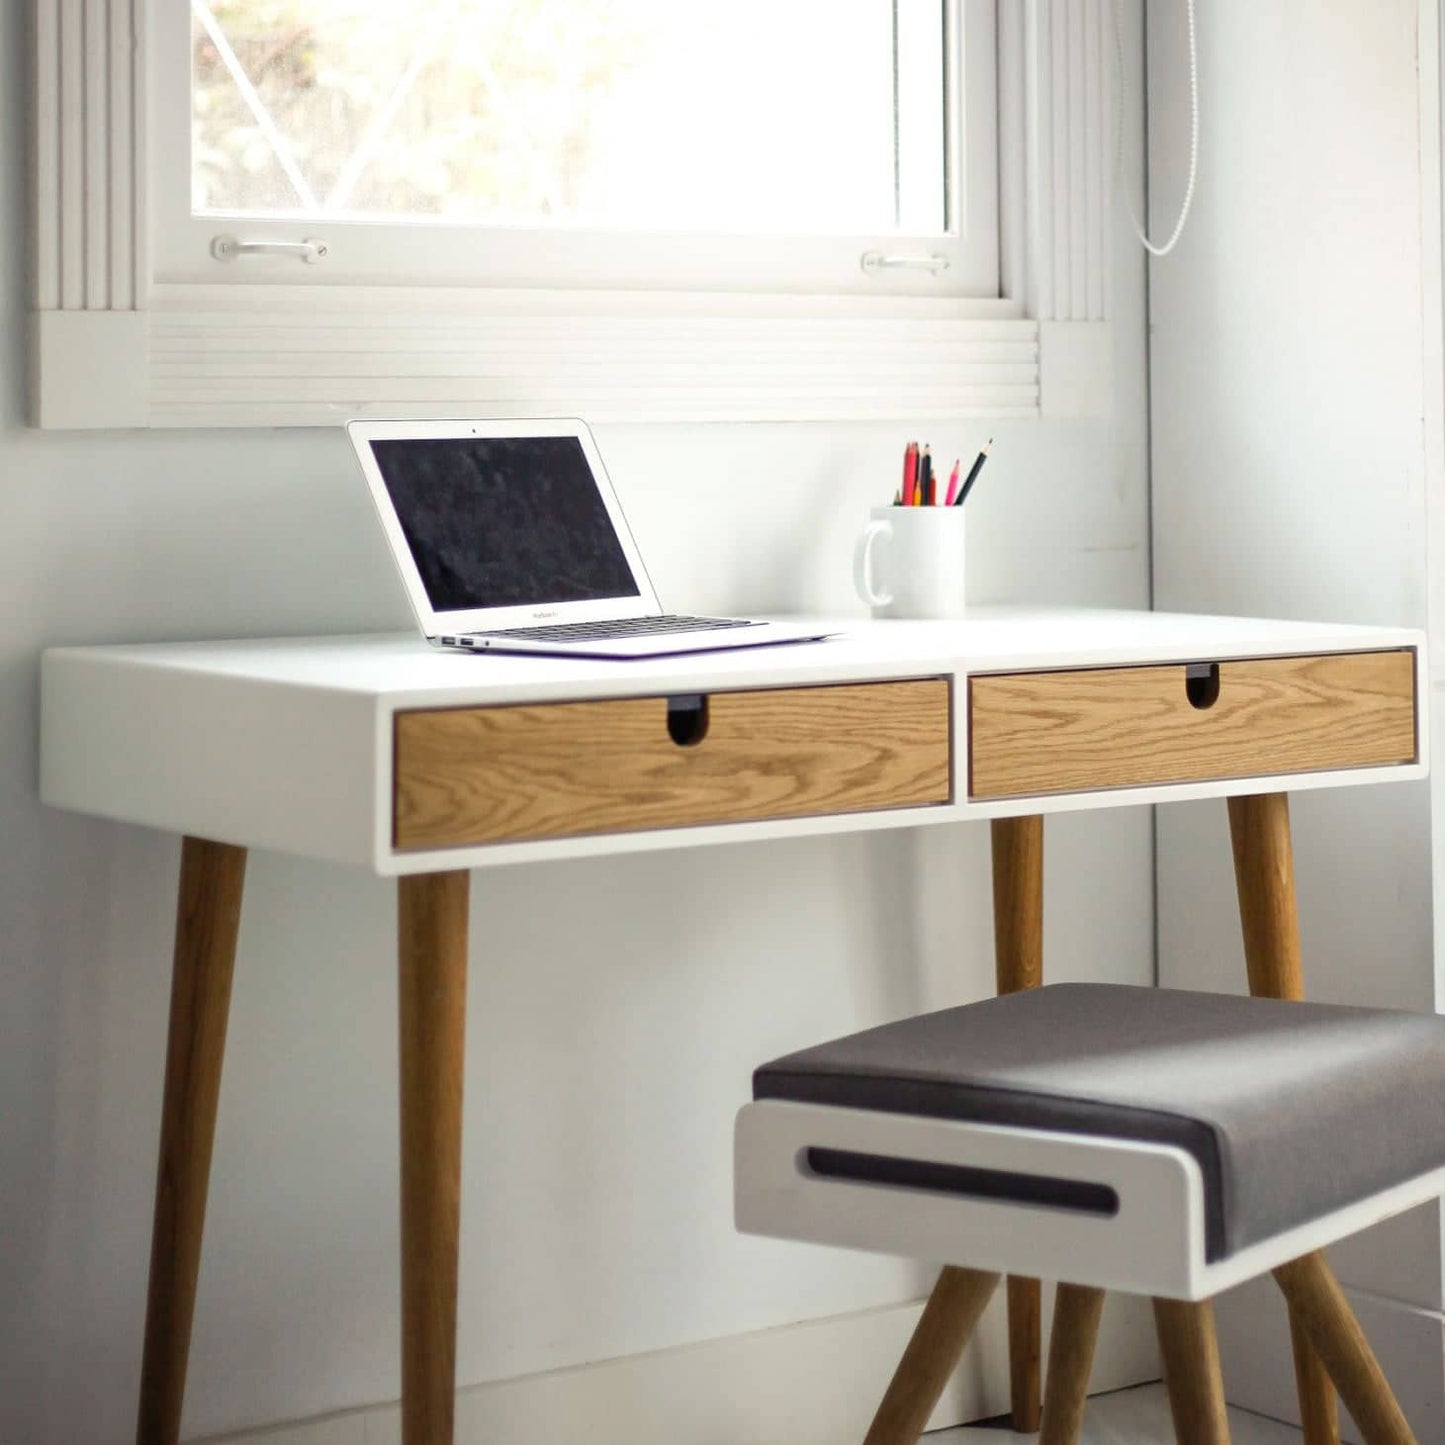 مكتب خشبي بسيط - DORE-homznia